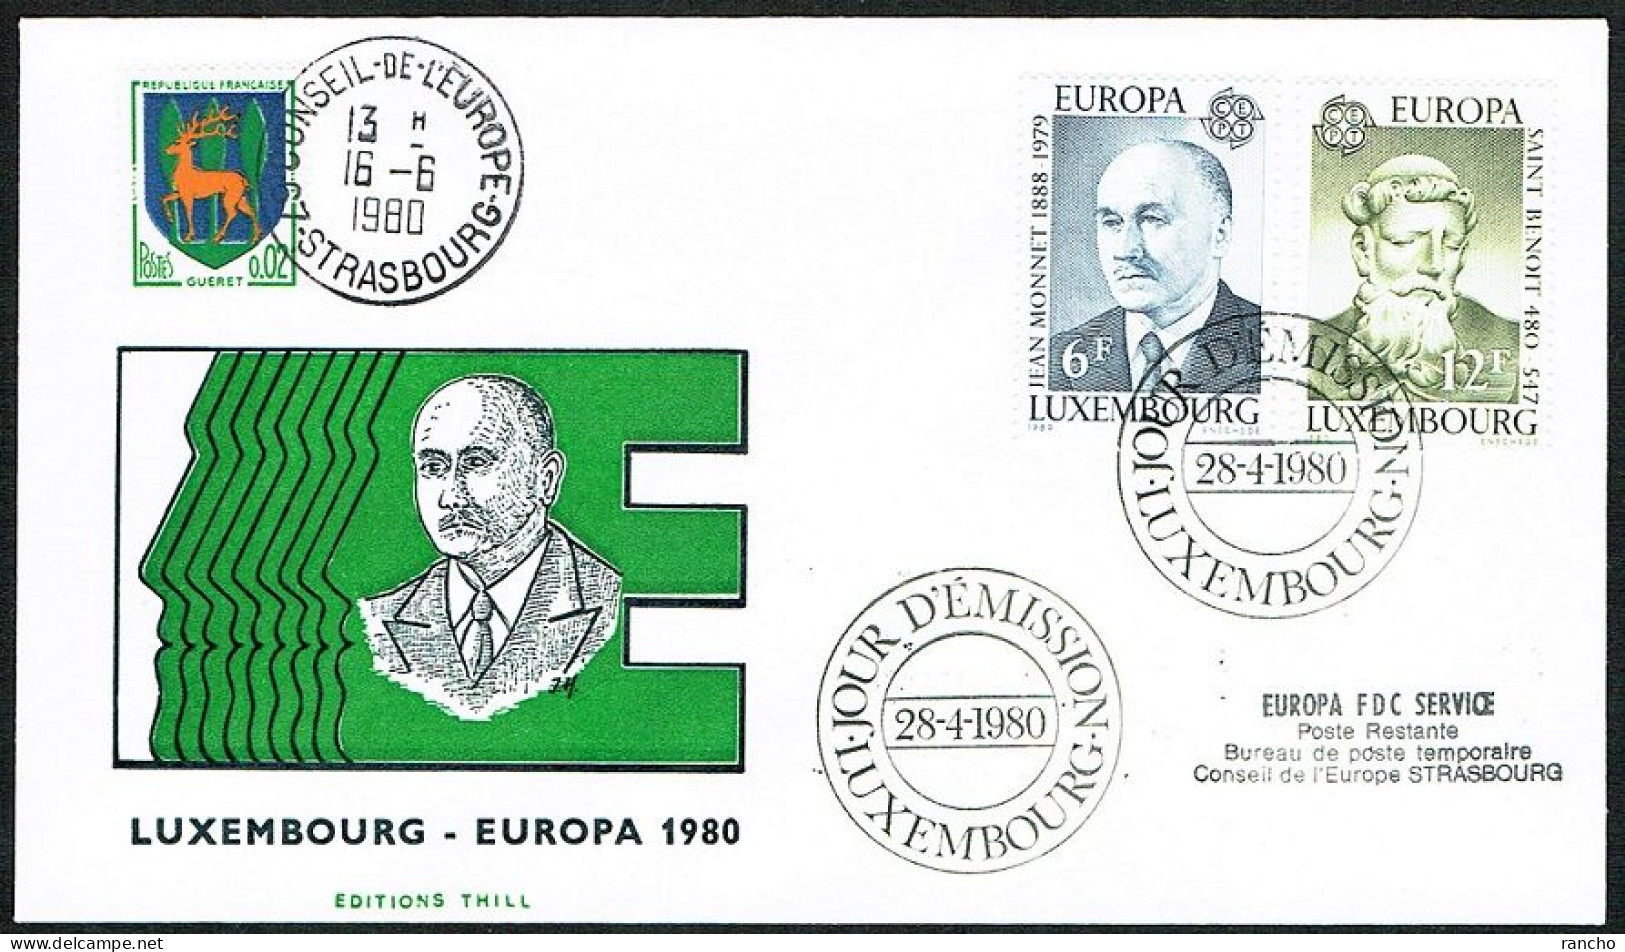 EUROPA FDC SERVICE . TIRAGE LIMITE Nr:60/20. DU CONSEIL DE L'EUROPE STRASBOURG. LUXEMBOURG.28.4.1980. - Brieven En Documenten